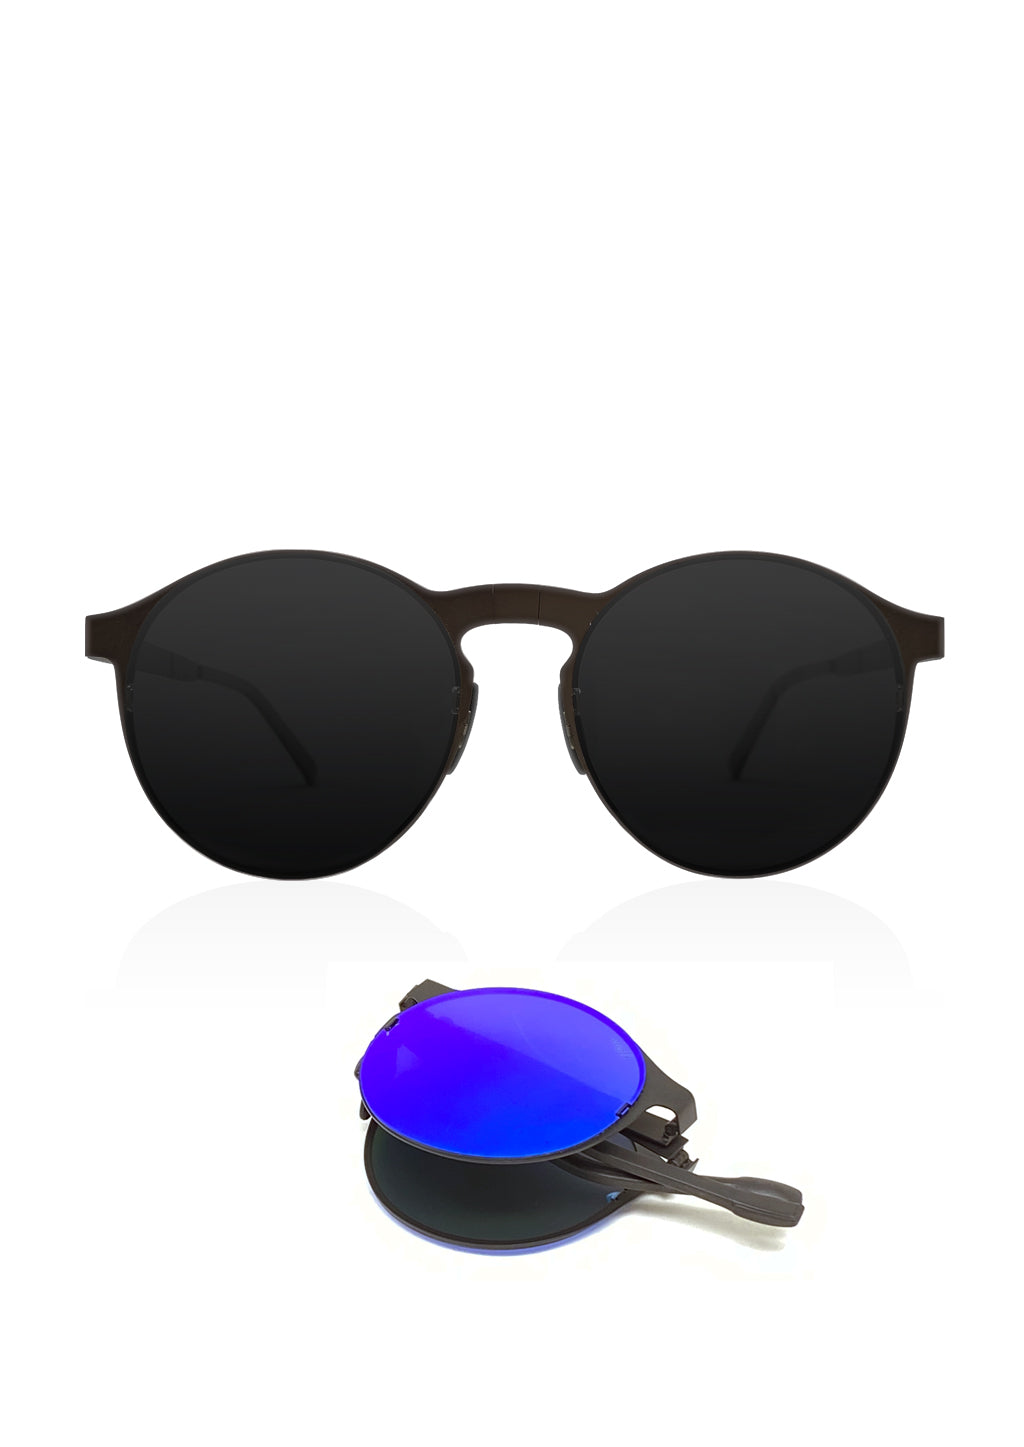 Foldable sunglasses - Looper classic round design - Front photo